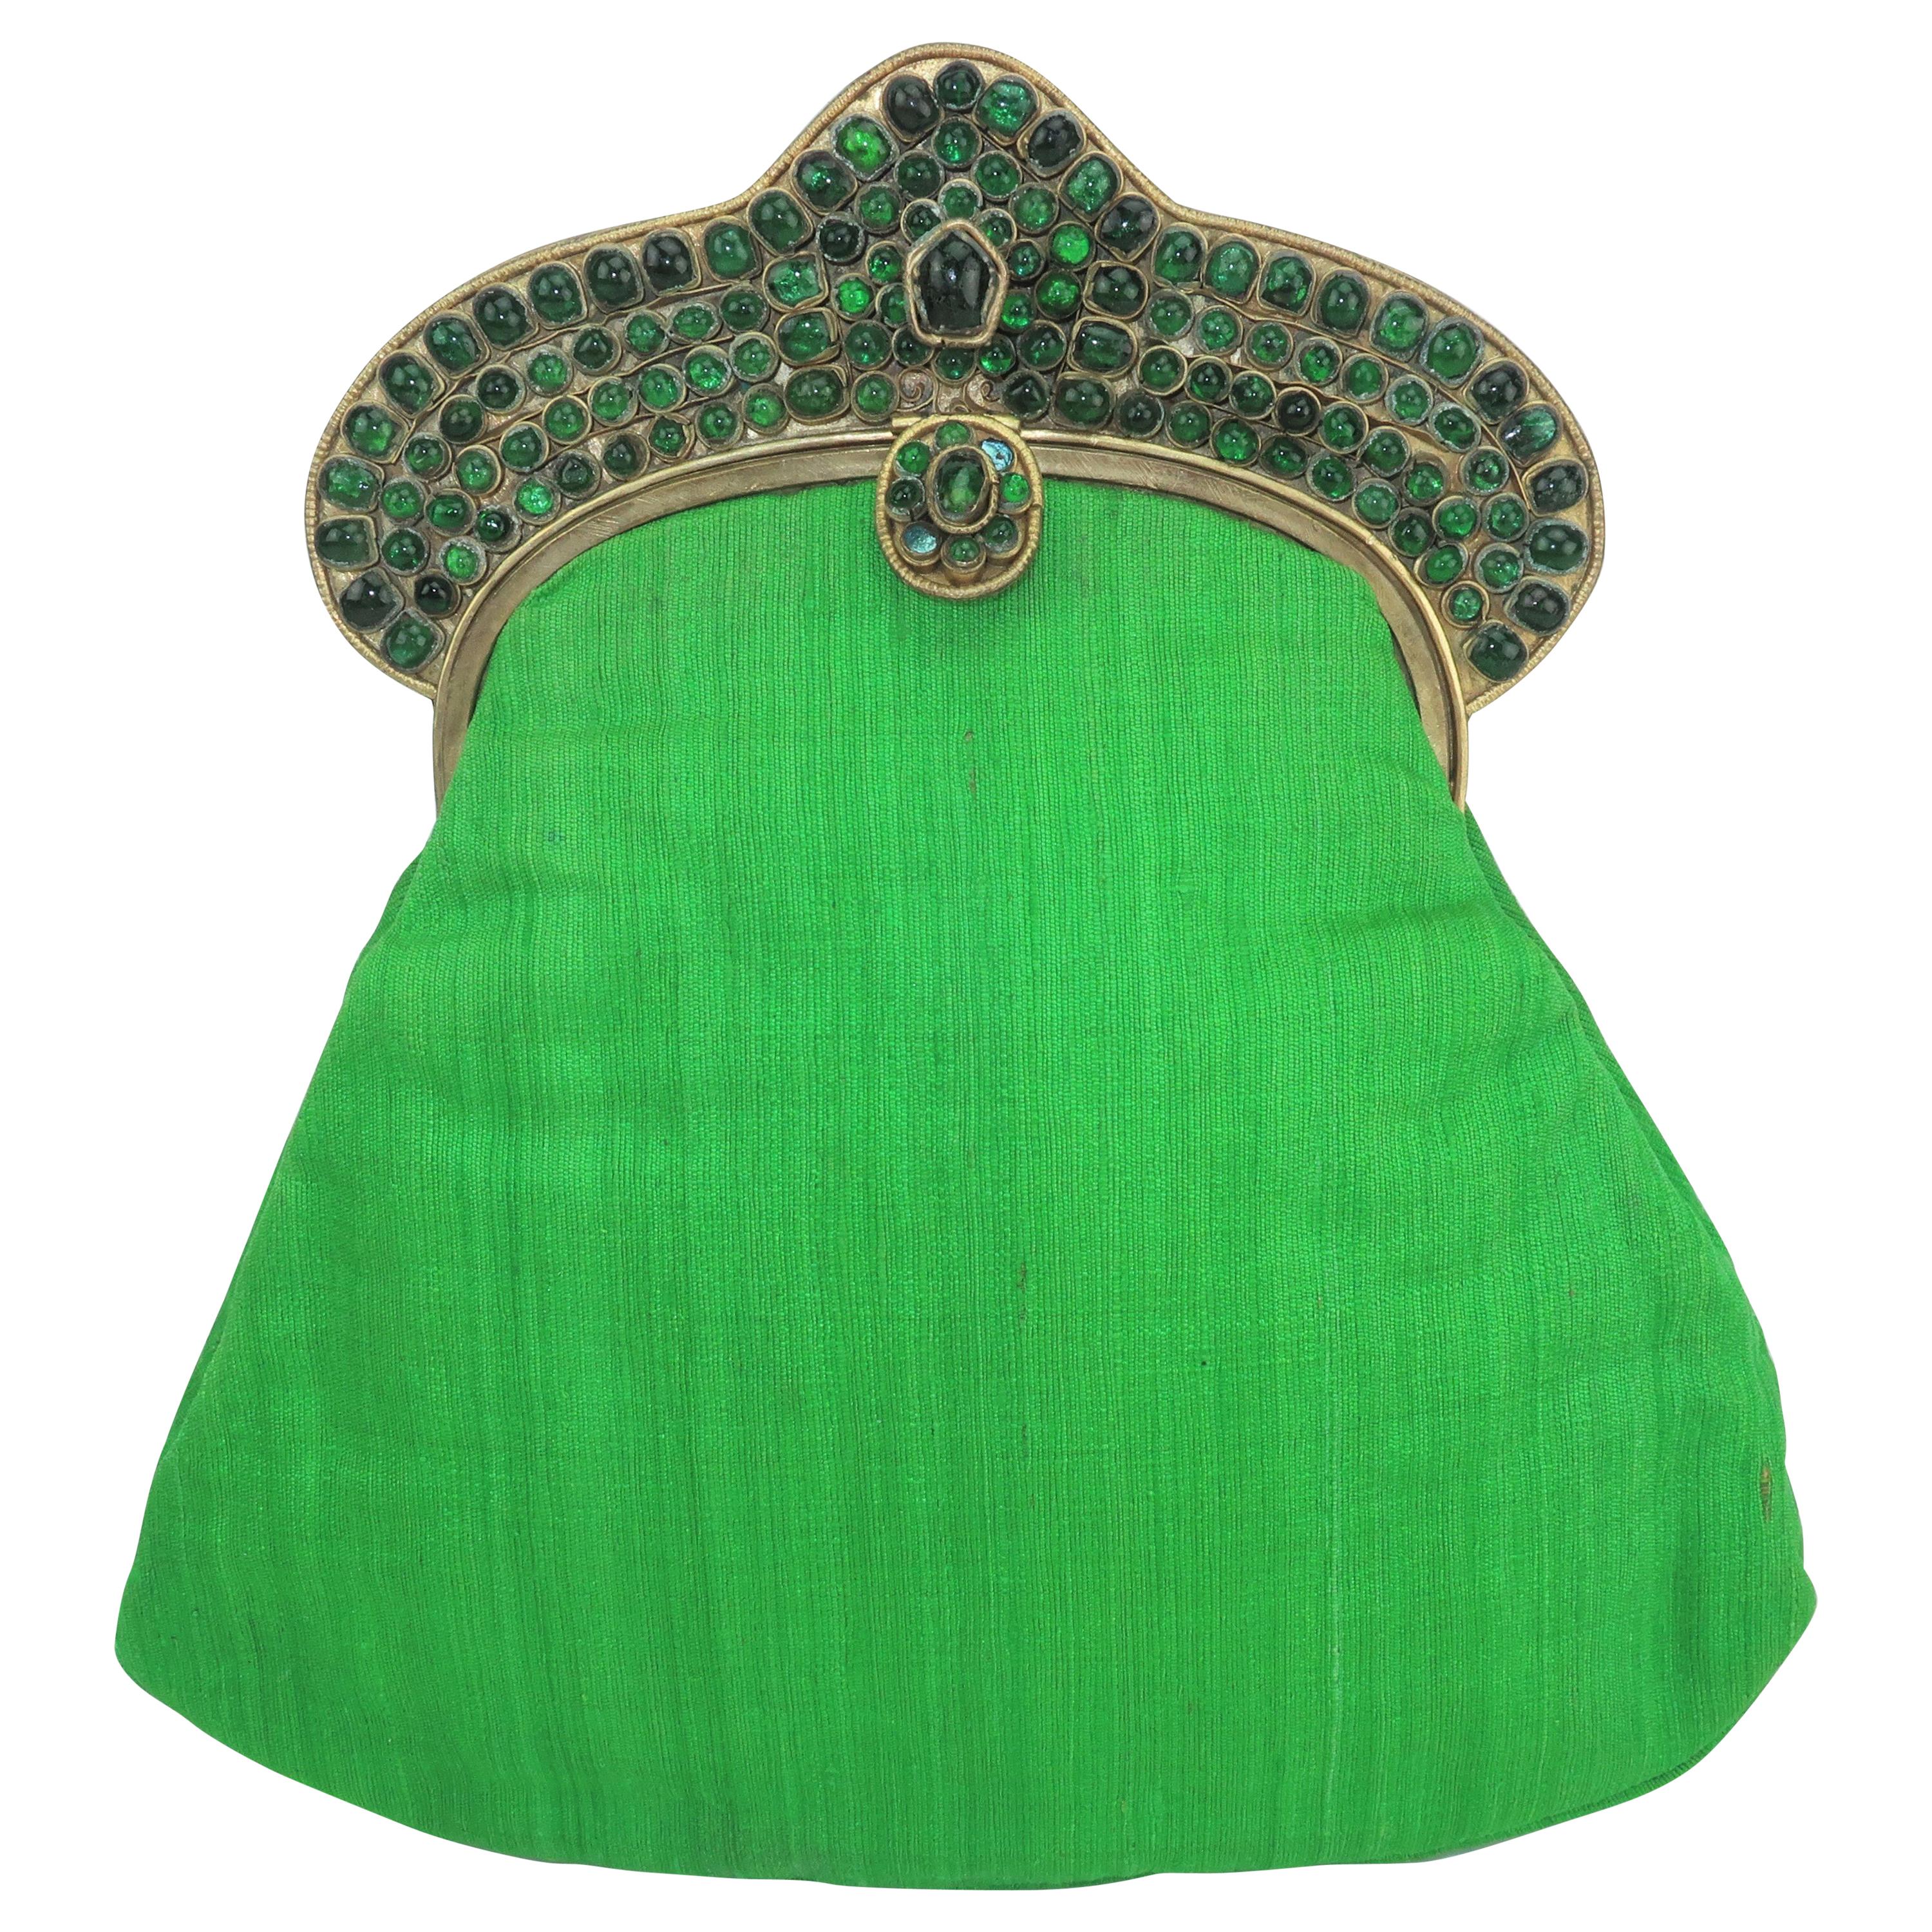 Green 1960's Mughal Style Bejeweled Indian Clutch Handbag